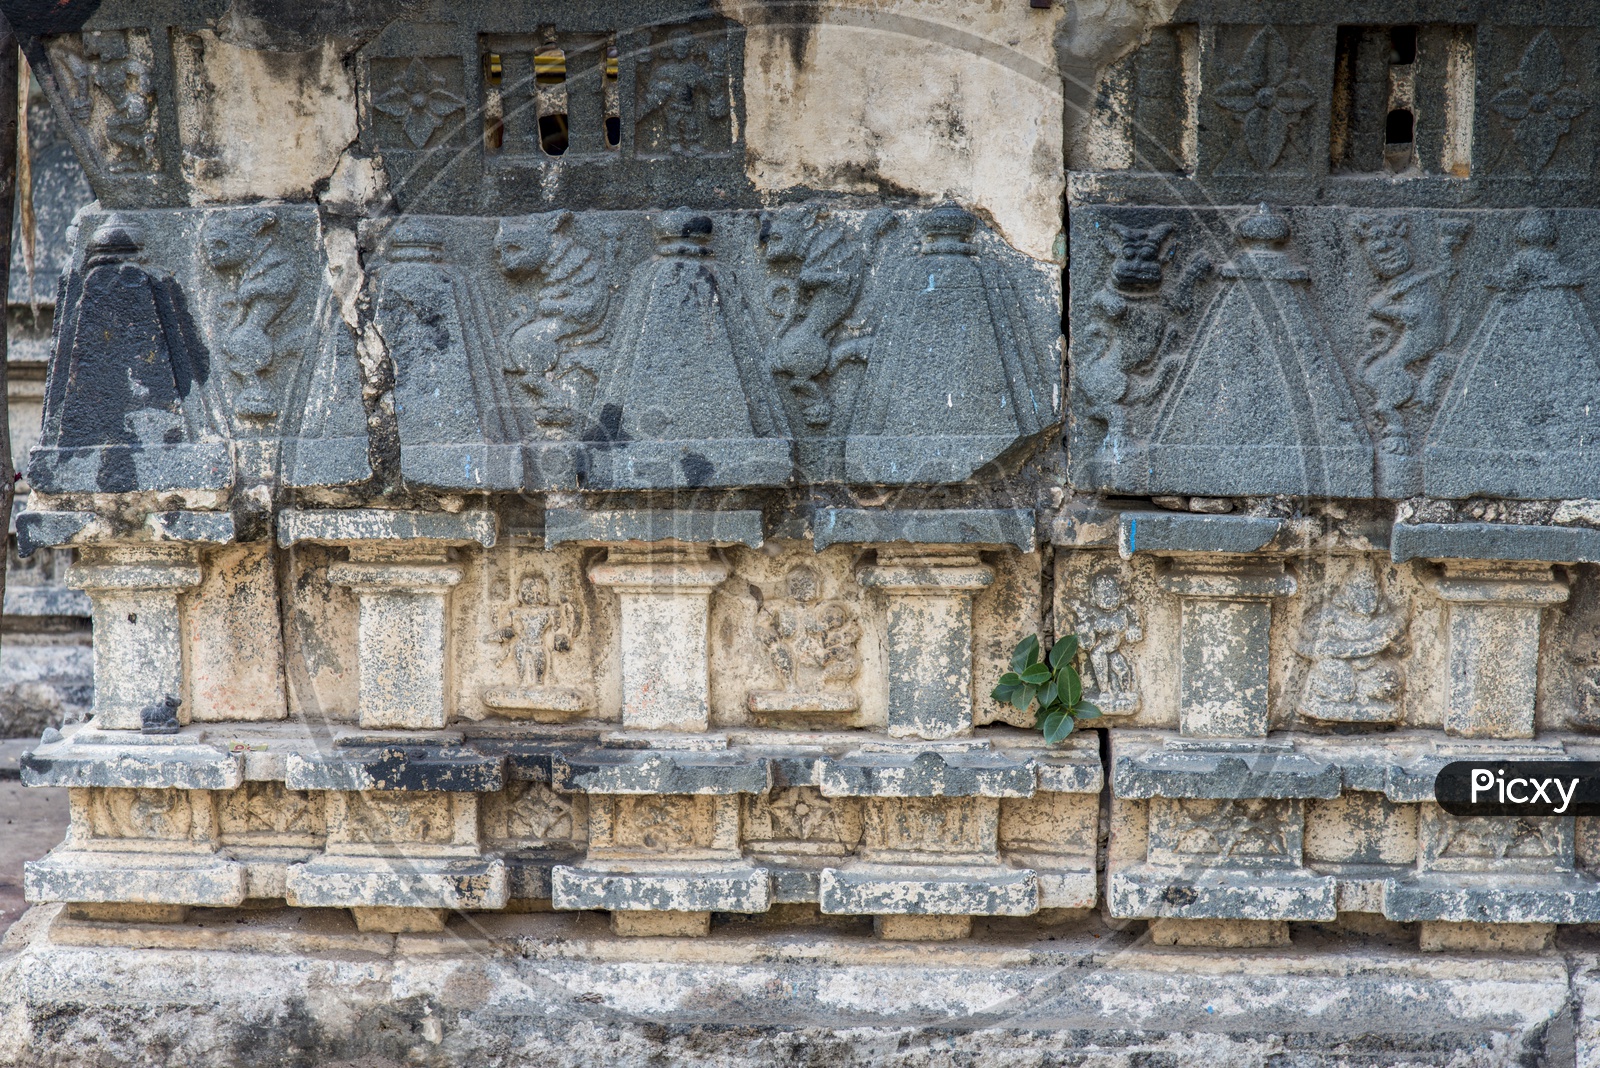 Granite pillars resemble the Thousand Pillar temple in Warangal